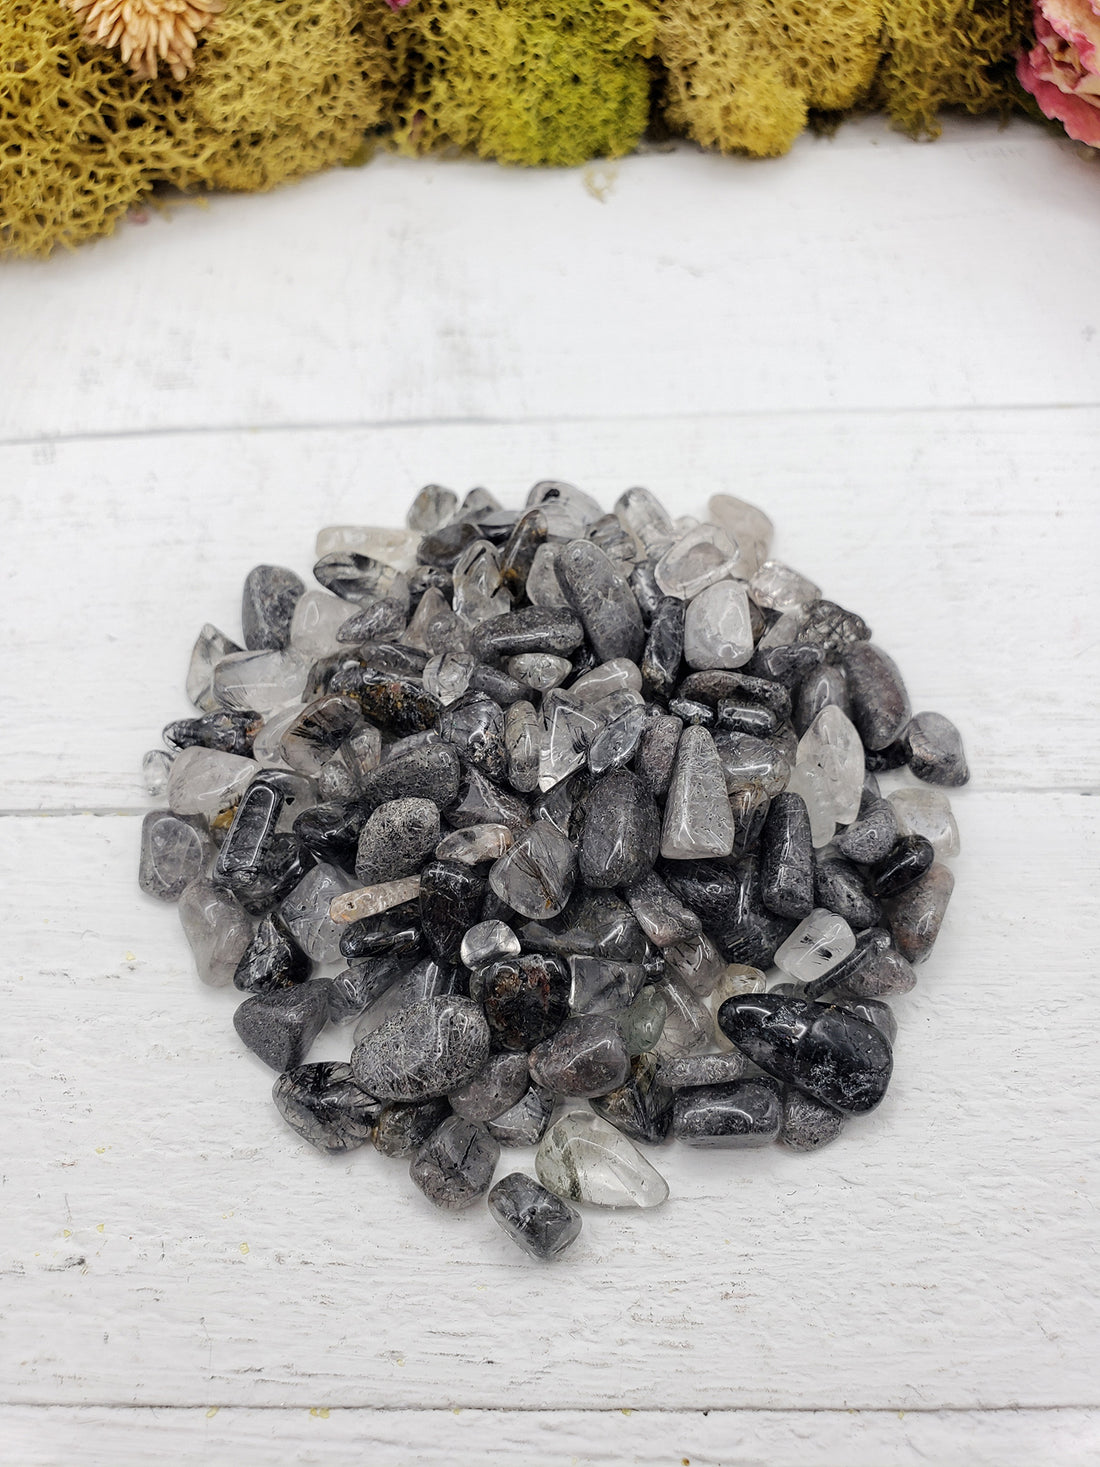 2 ounces of black tourmaline rutilated quartz on display